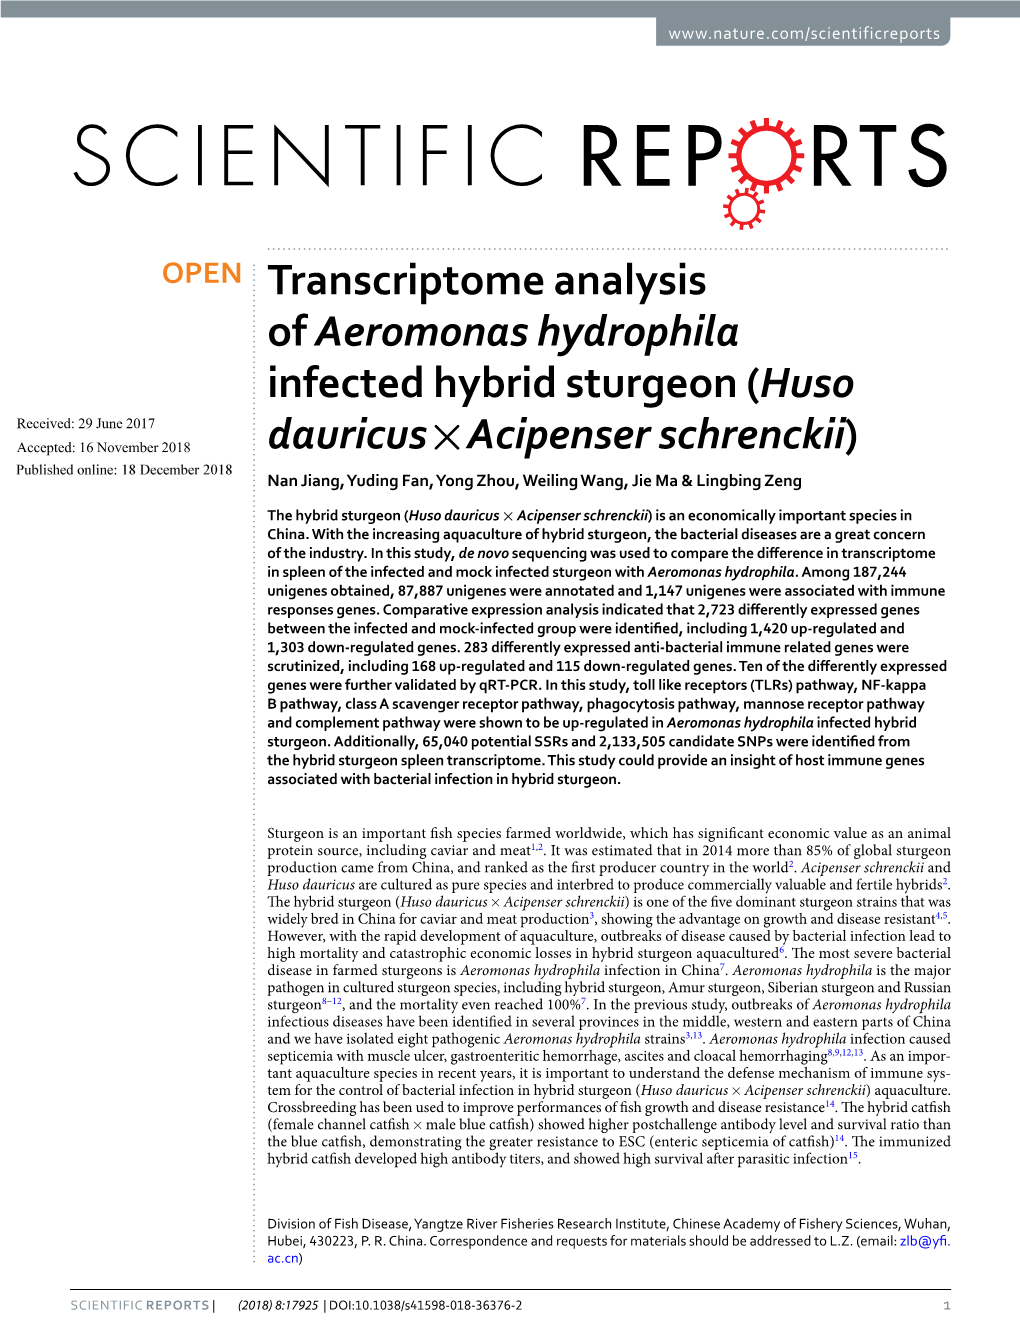 Transcriptome Analysis of Aeromonas Hydrophila Infected Hybrid Sturgeon